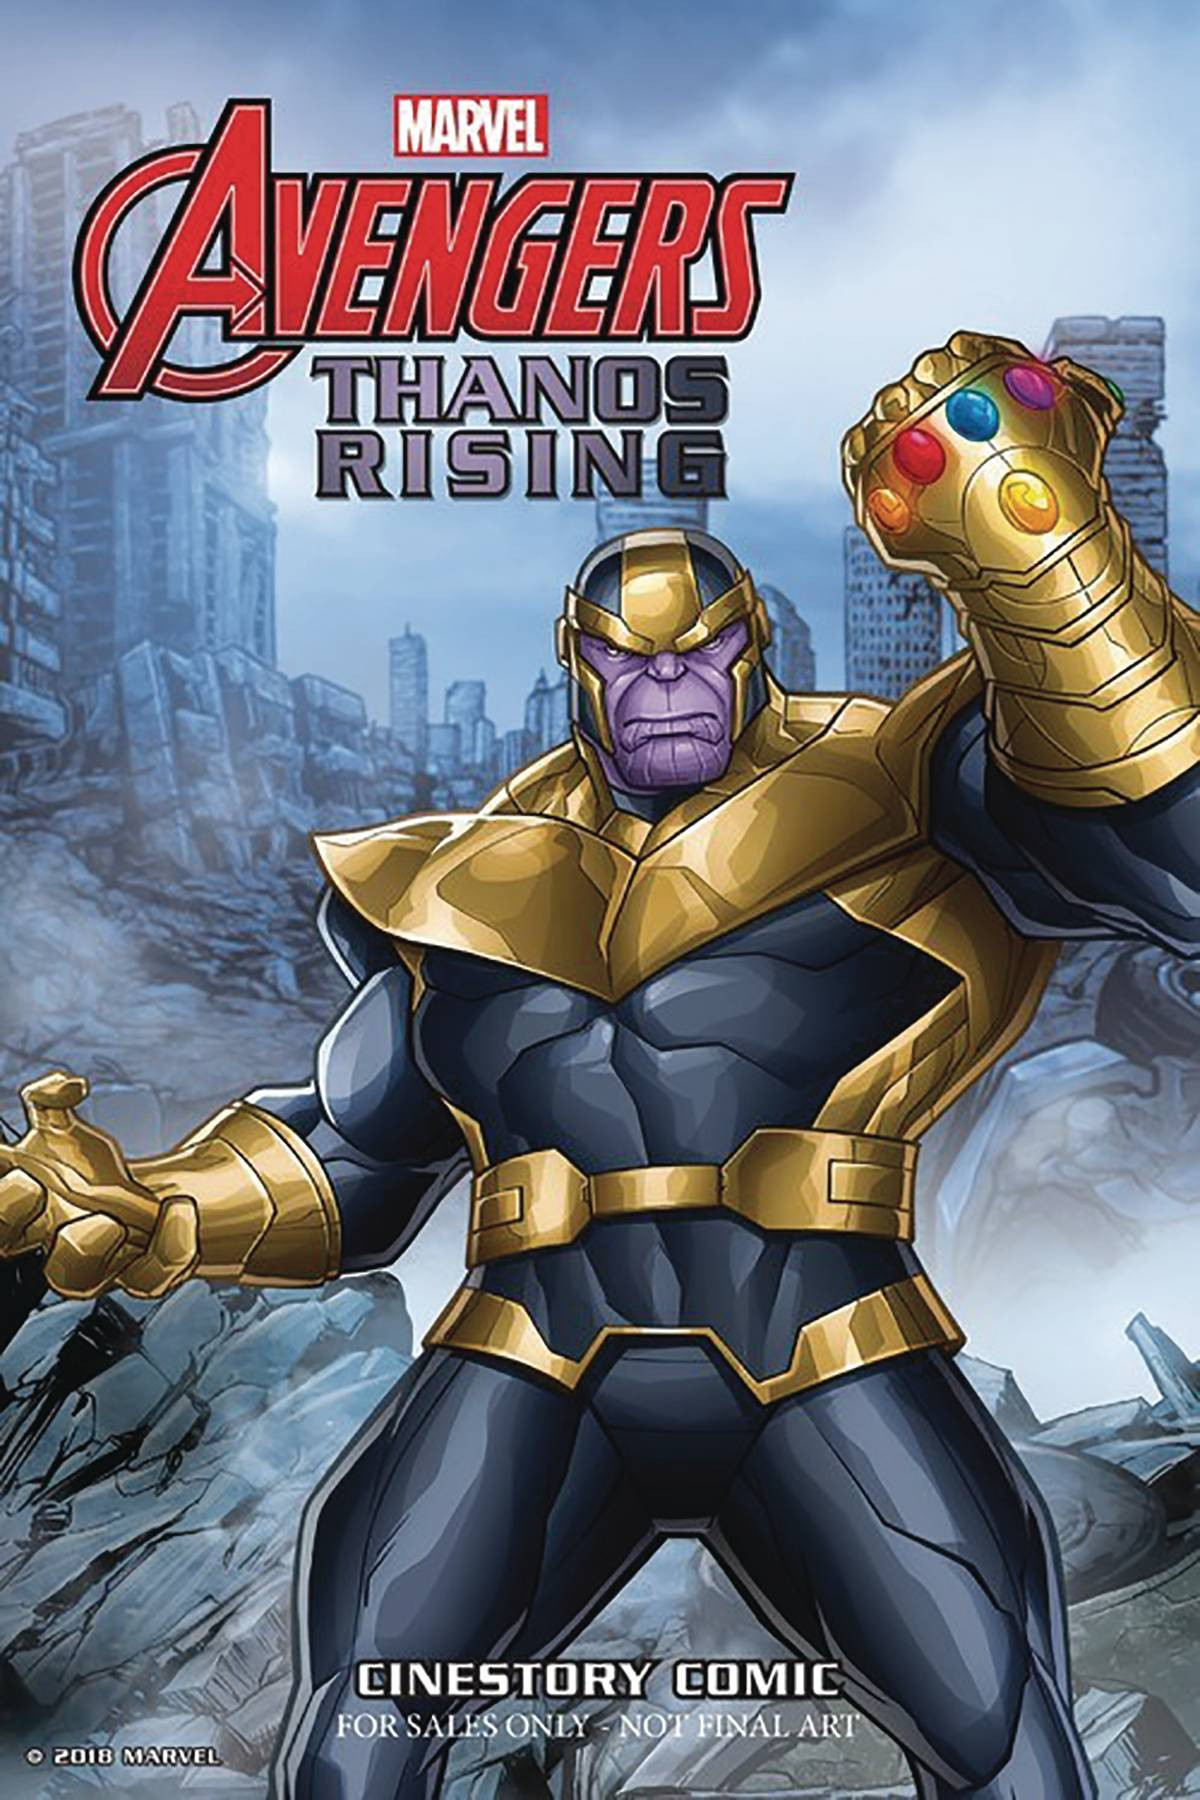 Marvel Avengers Assemble Thanos Rising Cinestory Comic